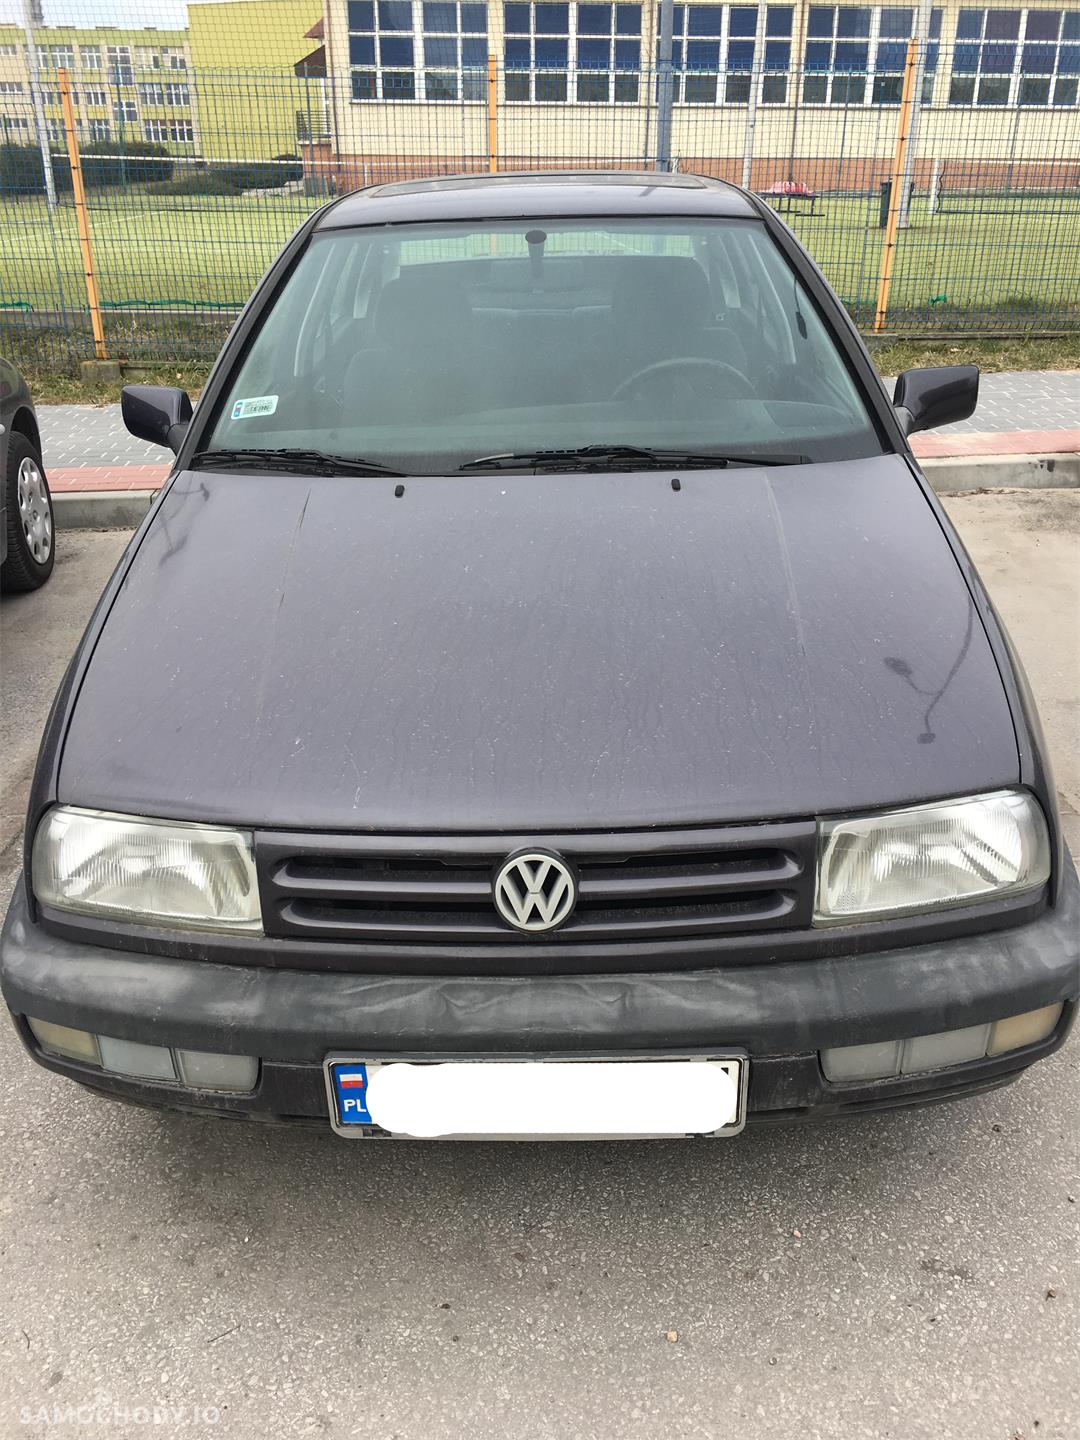 Volkswagen Vento Sprzedam samochód volkswagen vento 1.8 LPG 2